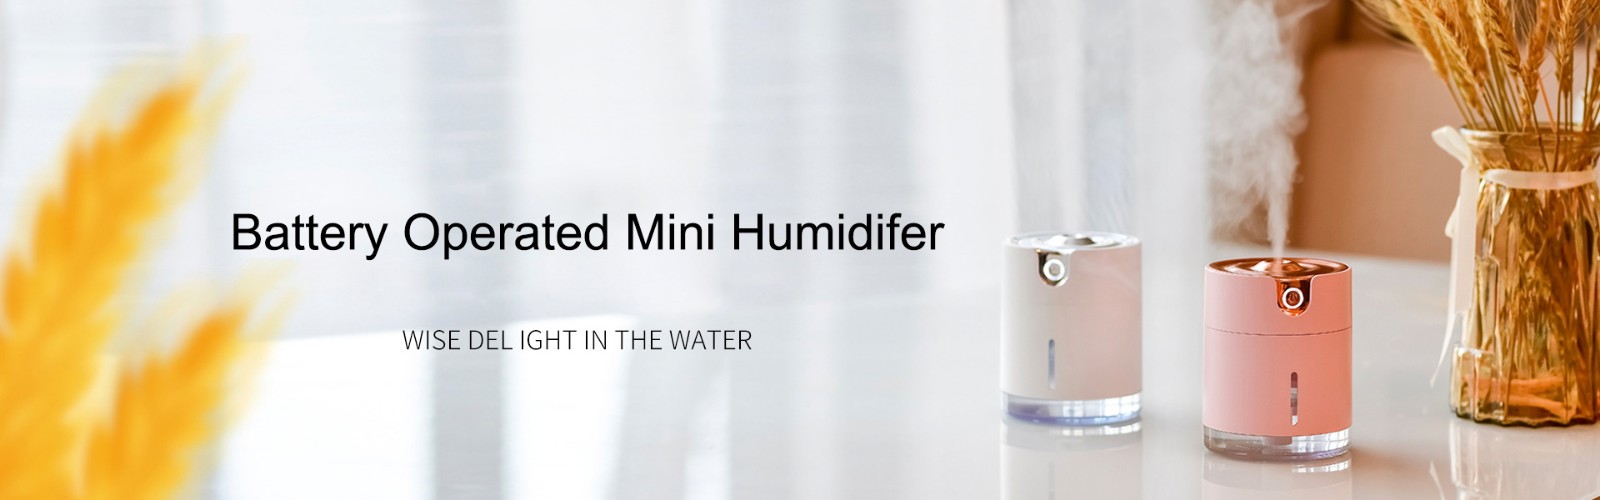 Pengwing-Best Car Humidifier Factory, Mini Air Humidifier | Pengwing